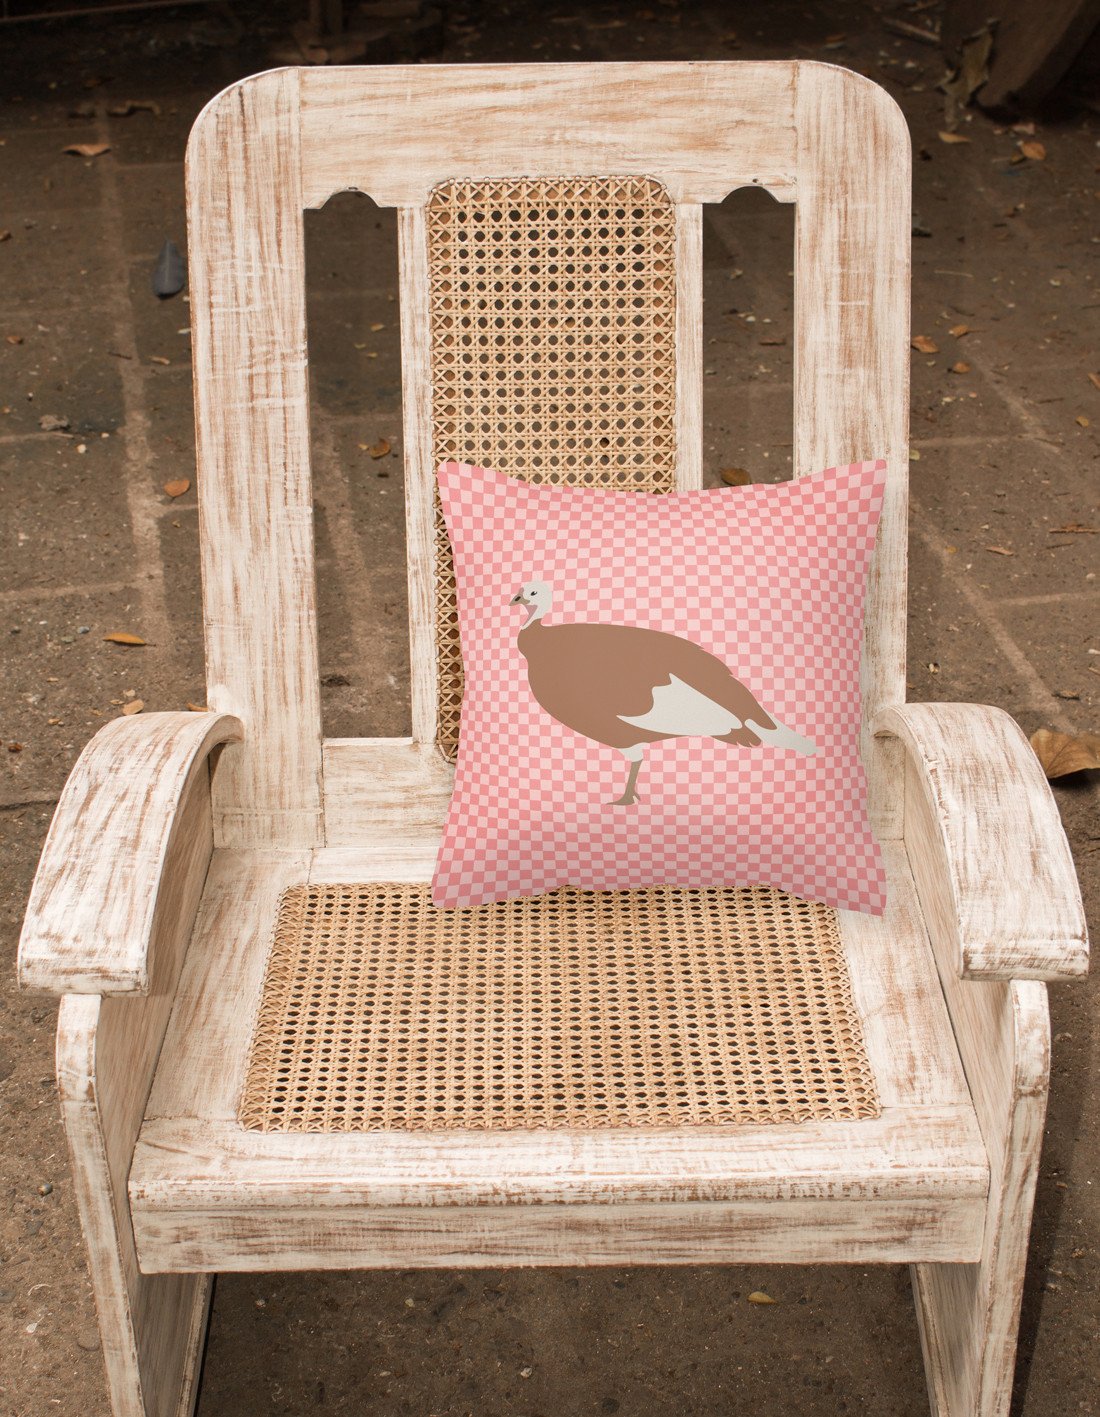 Jersey Buff Turkey Hen Pink Check Fabric Decorative Pillow BB7984PW1818 by Caroline's Treasures